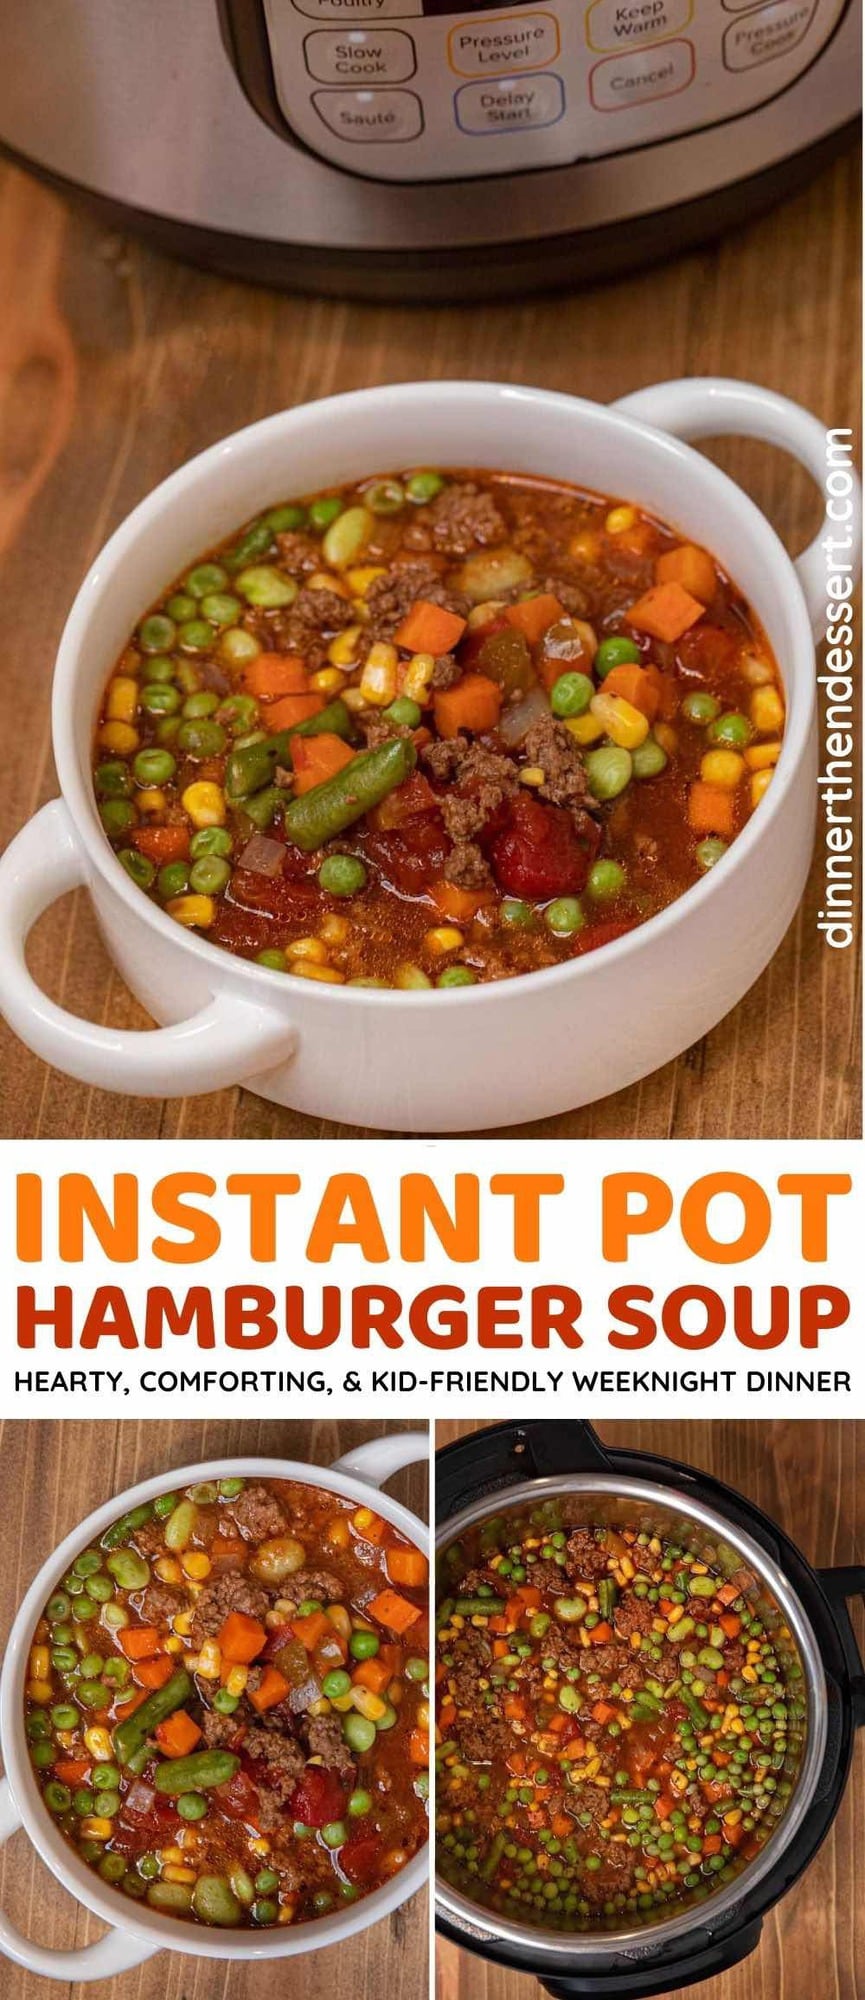 https://dinnerthendessert.com/wp-content/uploads/2021/05/Instant-Pot-Hamburger-Soup-L.jpg